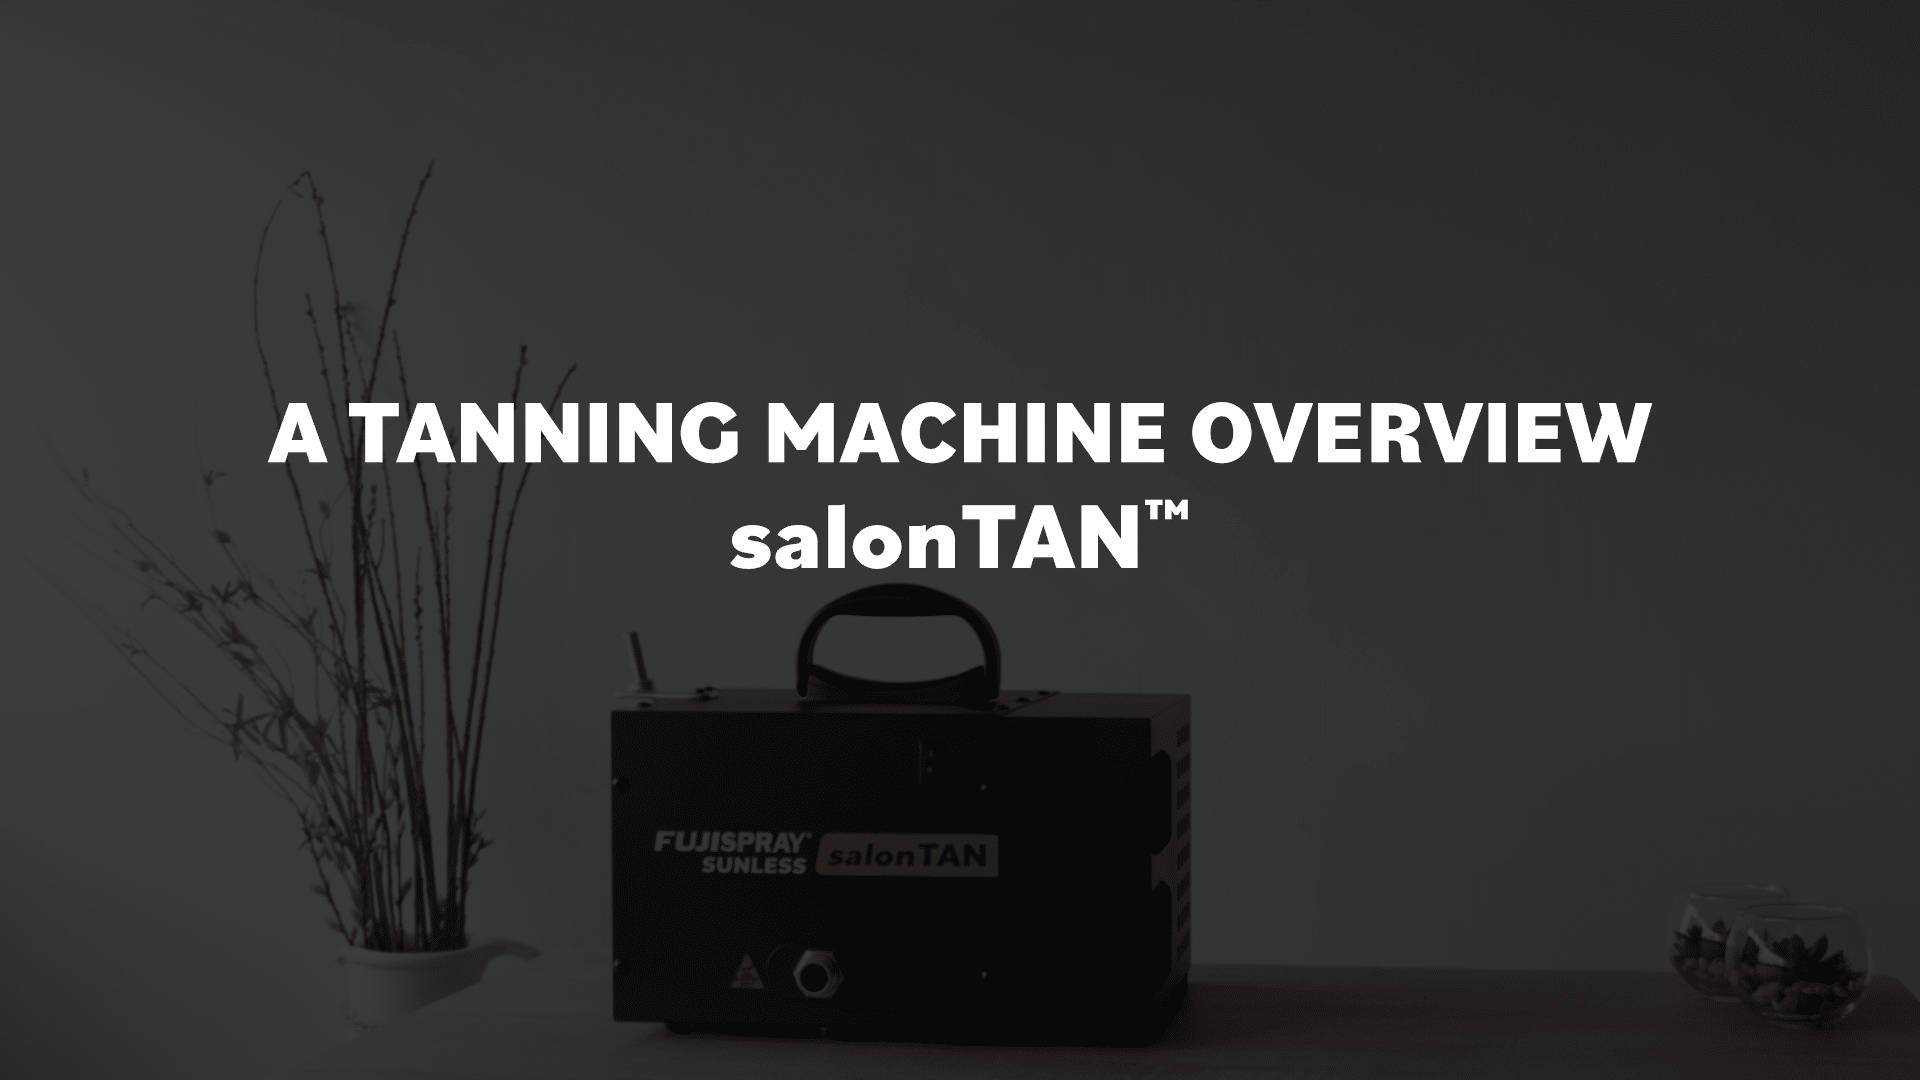 Fuji Spray Tanning System- 2150 Salon Tan